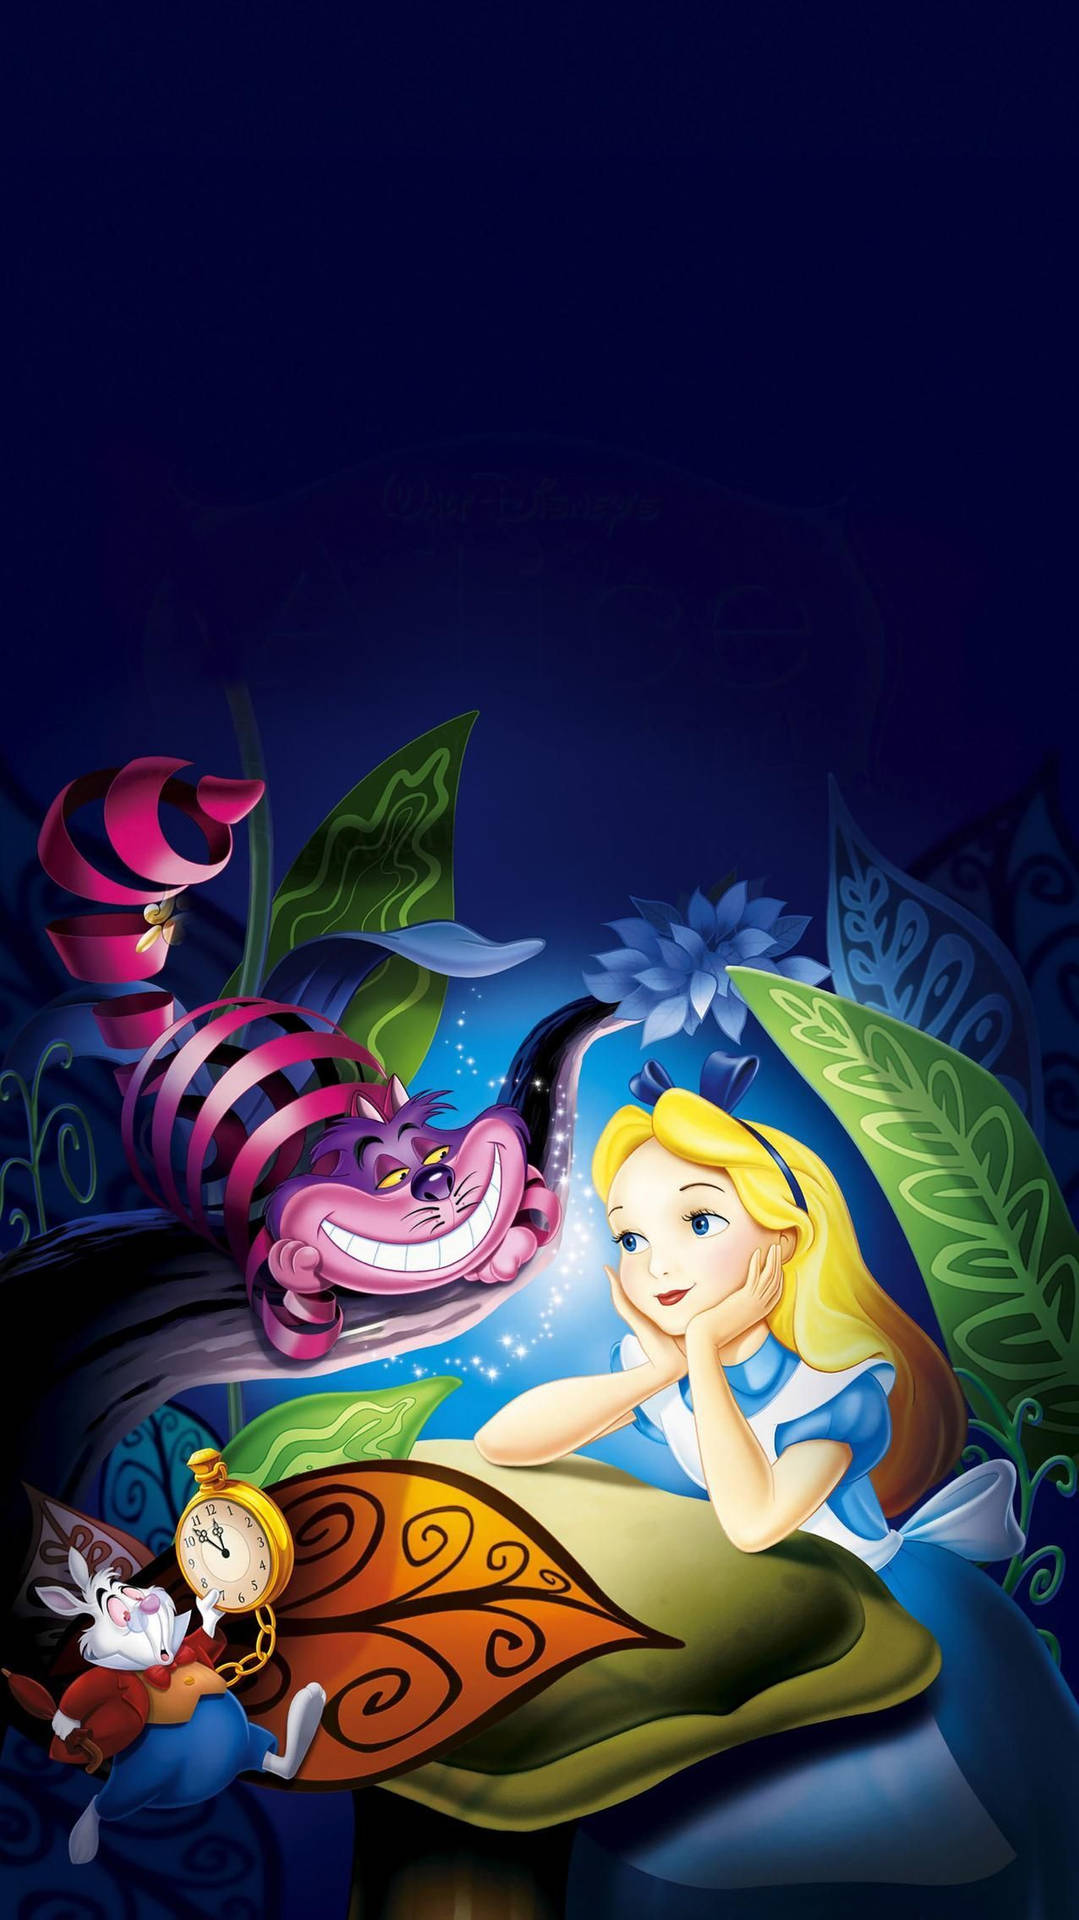 Free Alice In Wonderland Phone Wallpaper Downloads, [100+] Alice In  Wonderland Phone Wallpapers for FREE 